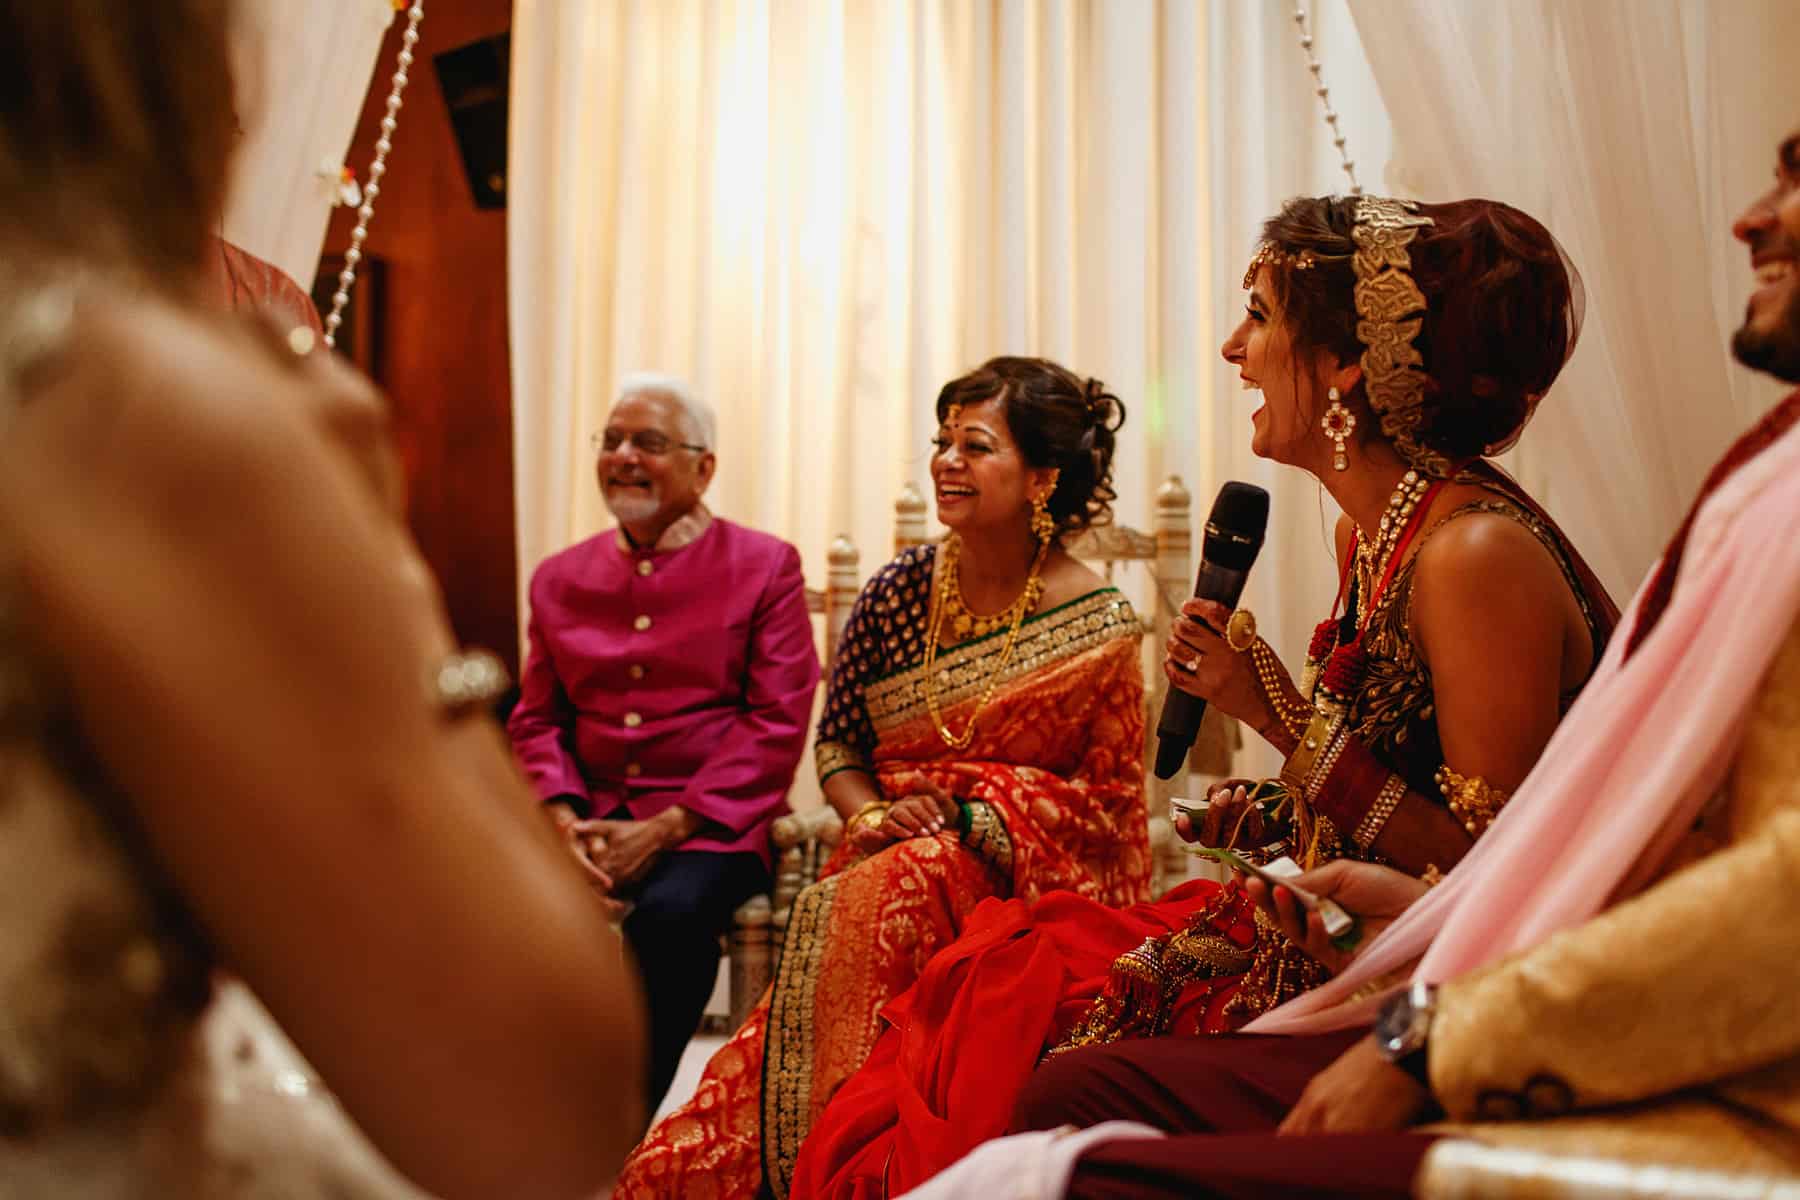 thornton manor hindu wedding photos